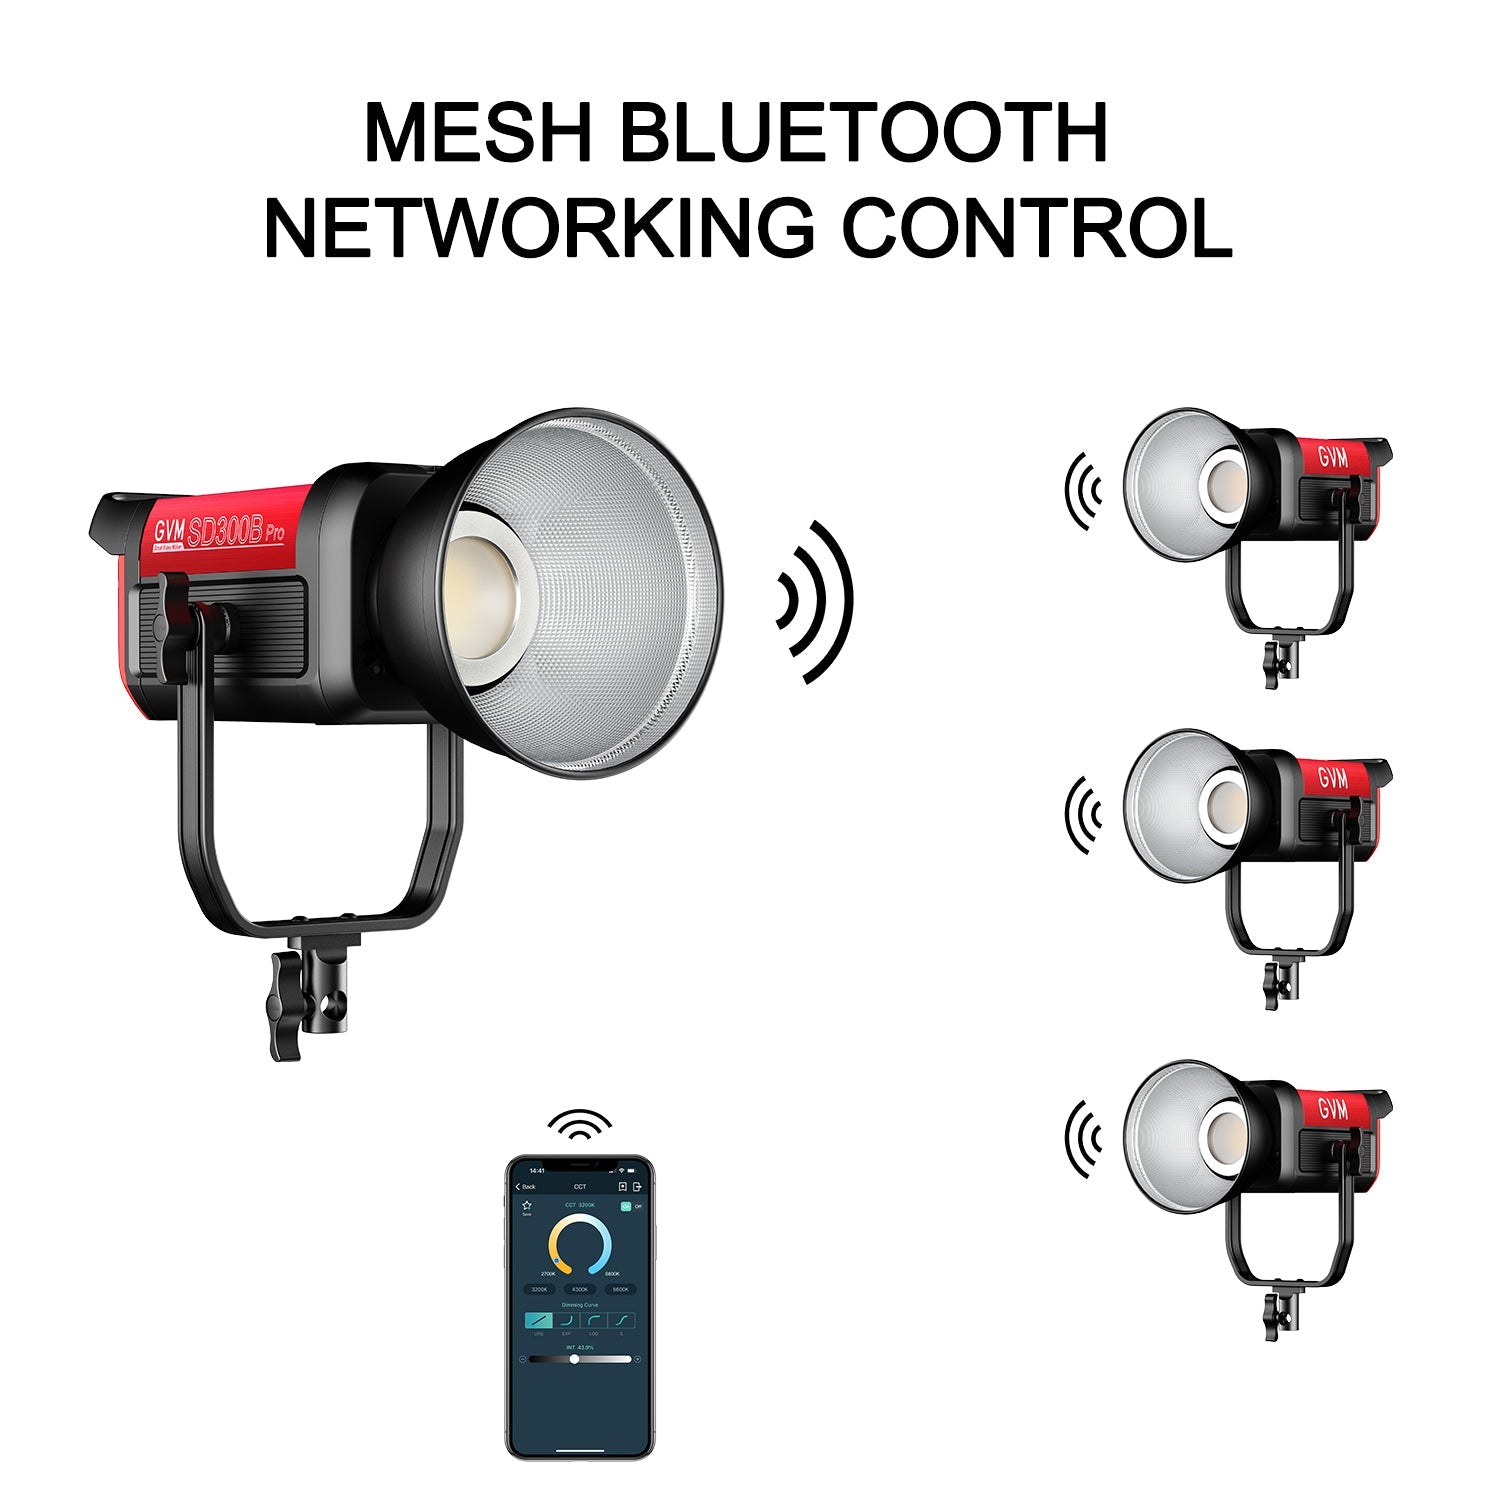 GVM PRO-SD300B 300W Bi-Color Monolight(V-mount && Mesh Bluetooth)(Shipping July 10) - GVMLED